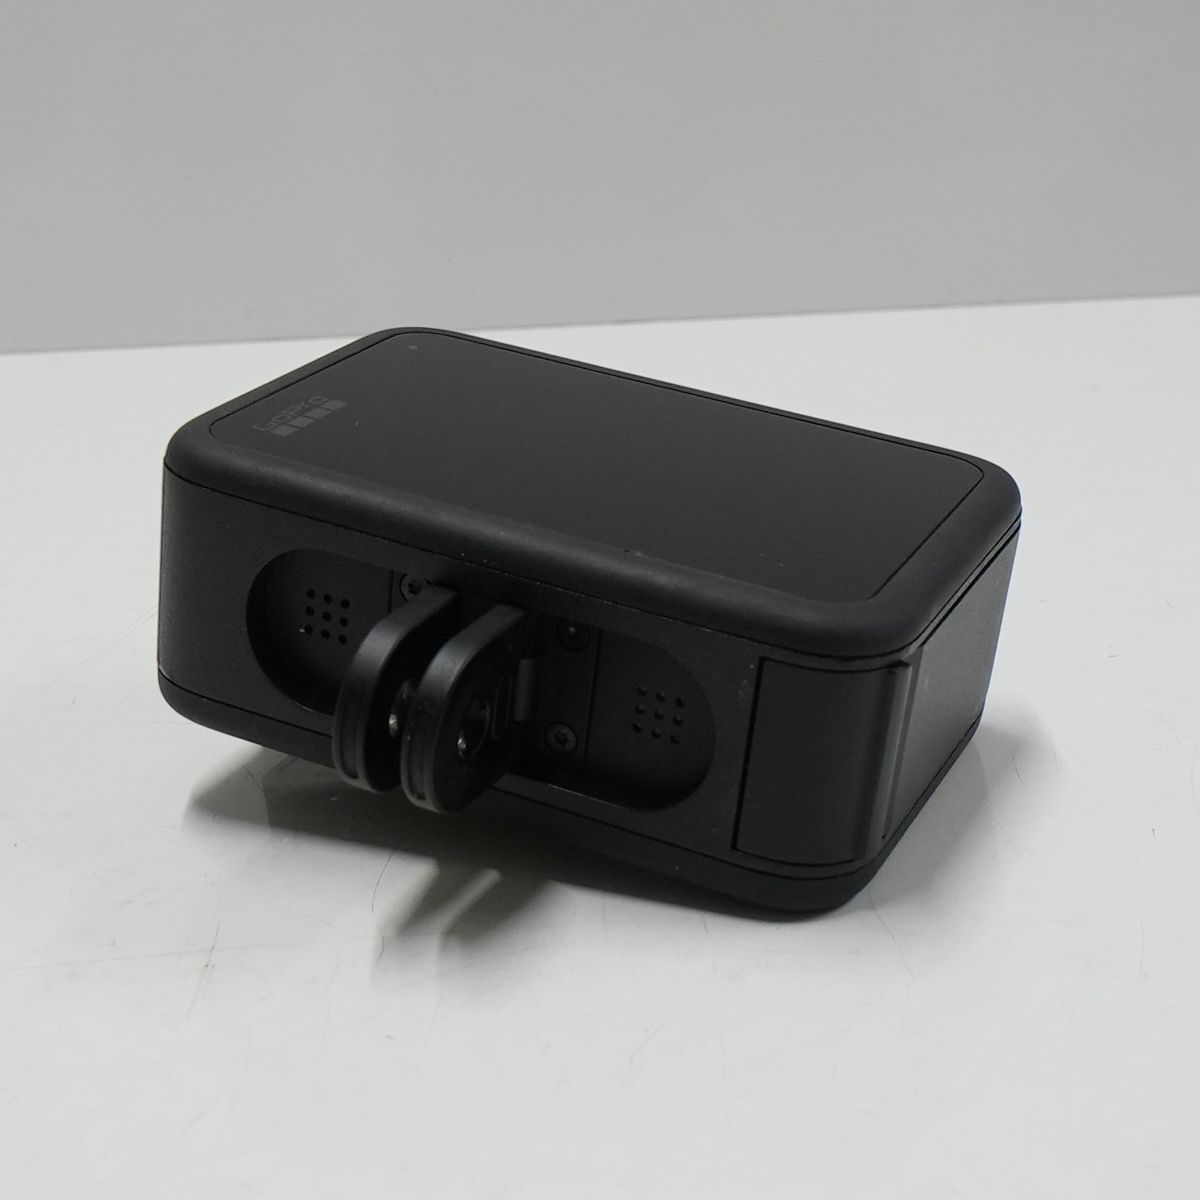 GoPro HERO9 Black ウェアラブルカメラ USED美品 5K アクションカメラ